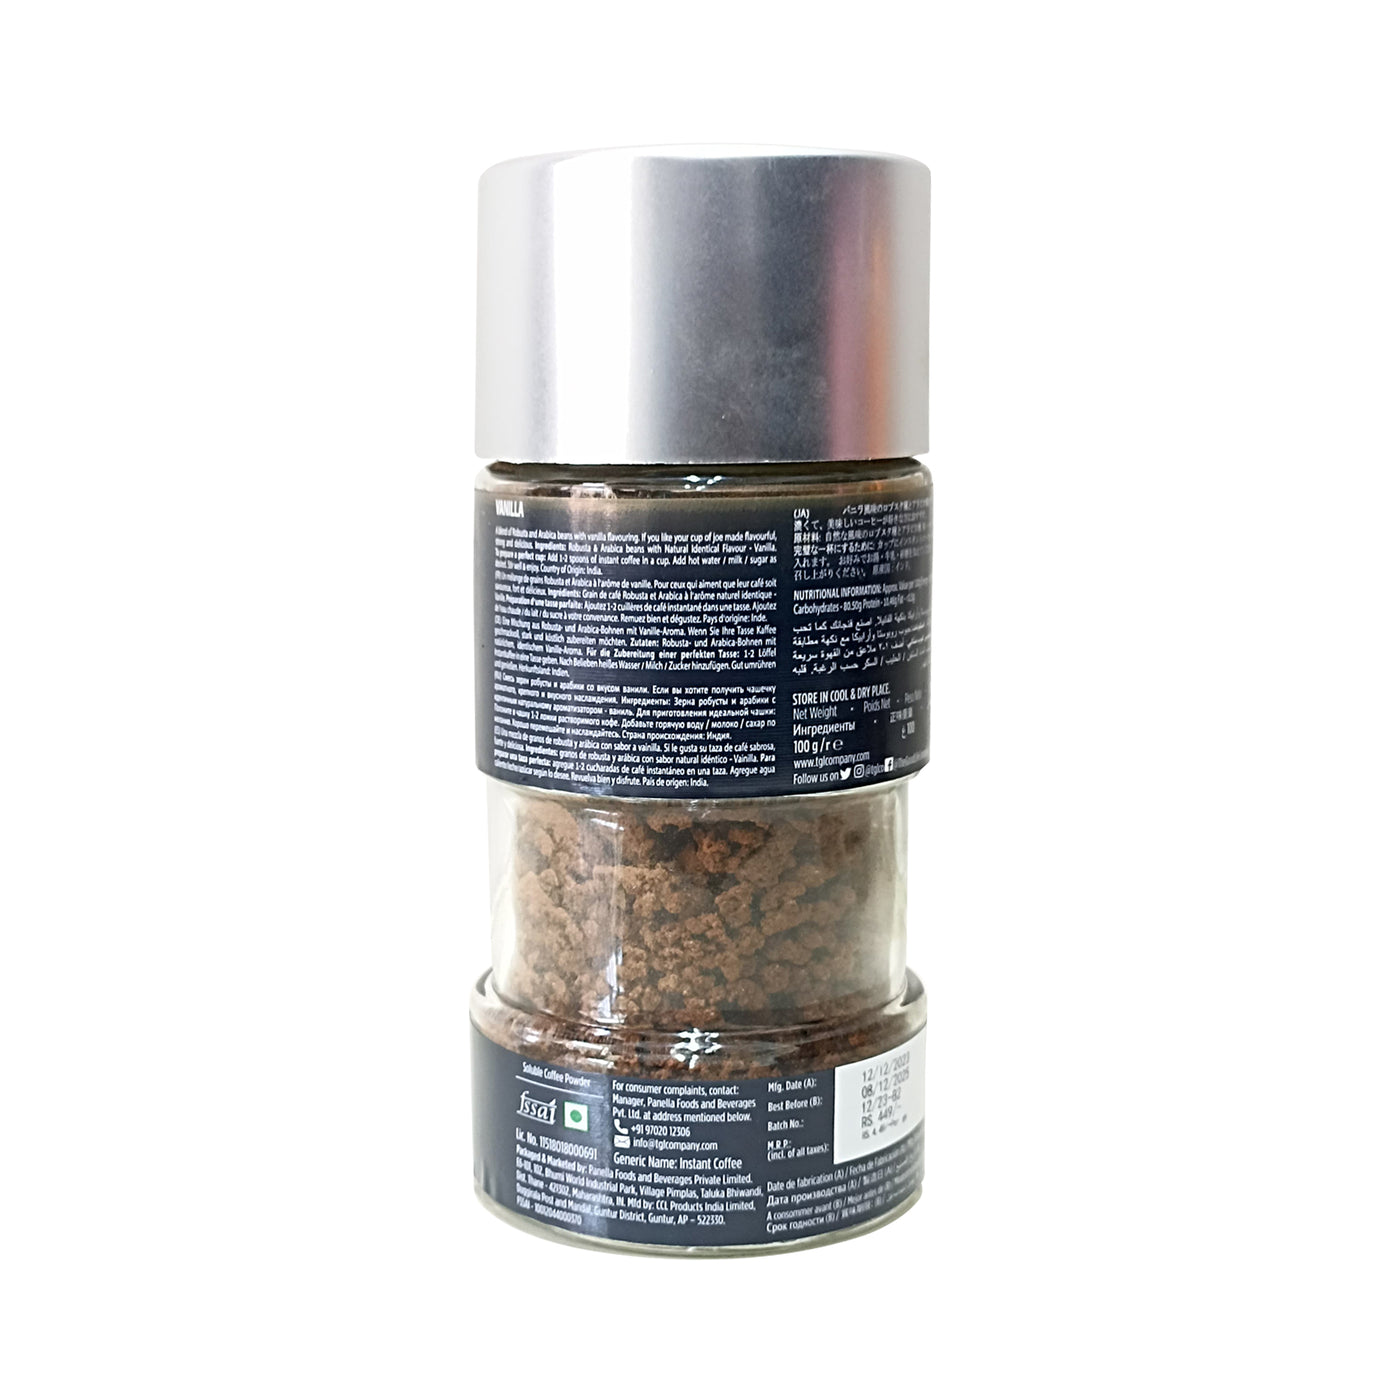 TGL Co. Vanilla Flavoured Instant Coffee + Hazelnut Flavored Instant Coffee (100 Grams Each)